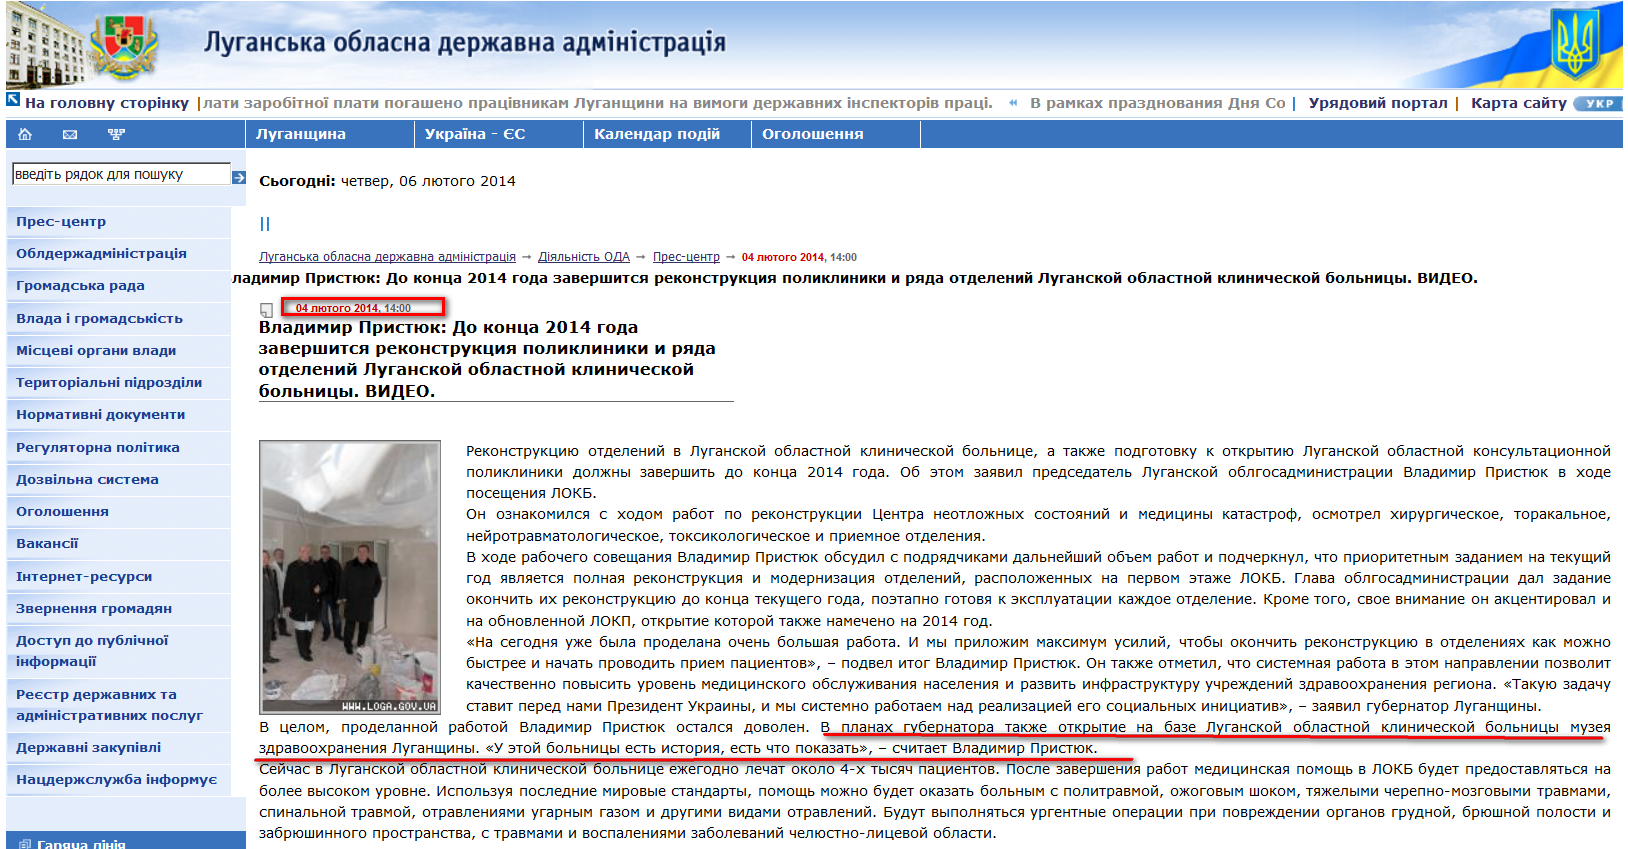 http://www.loga.gov.ua/oda/press/news/2014/02/04/news_63896.html